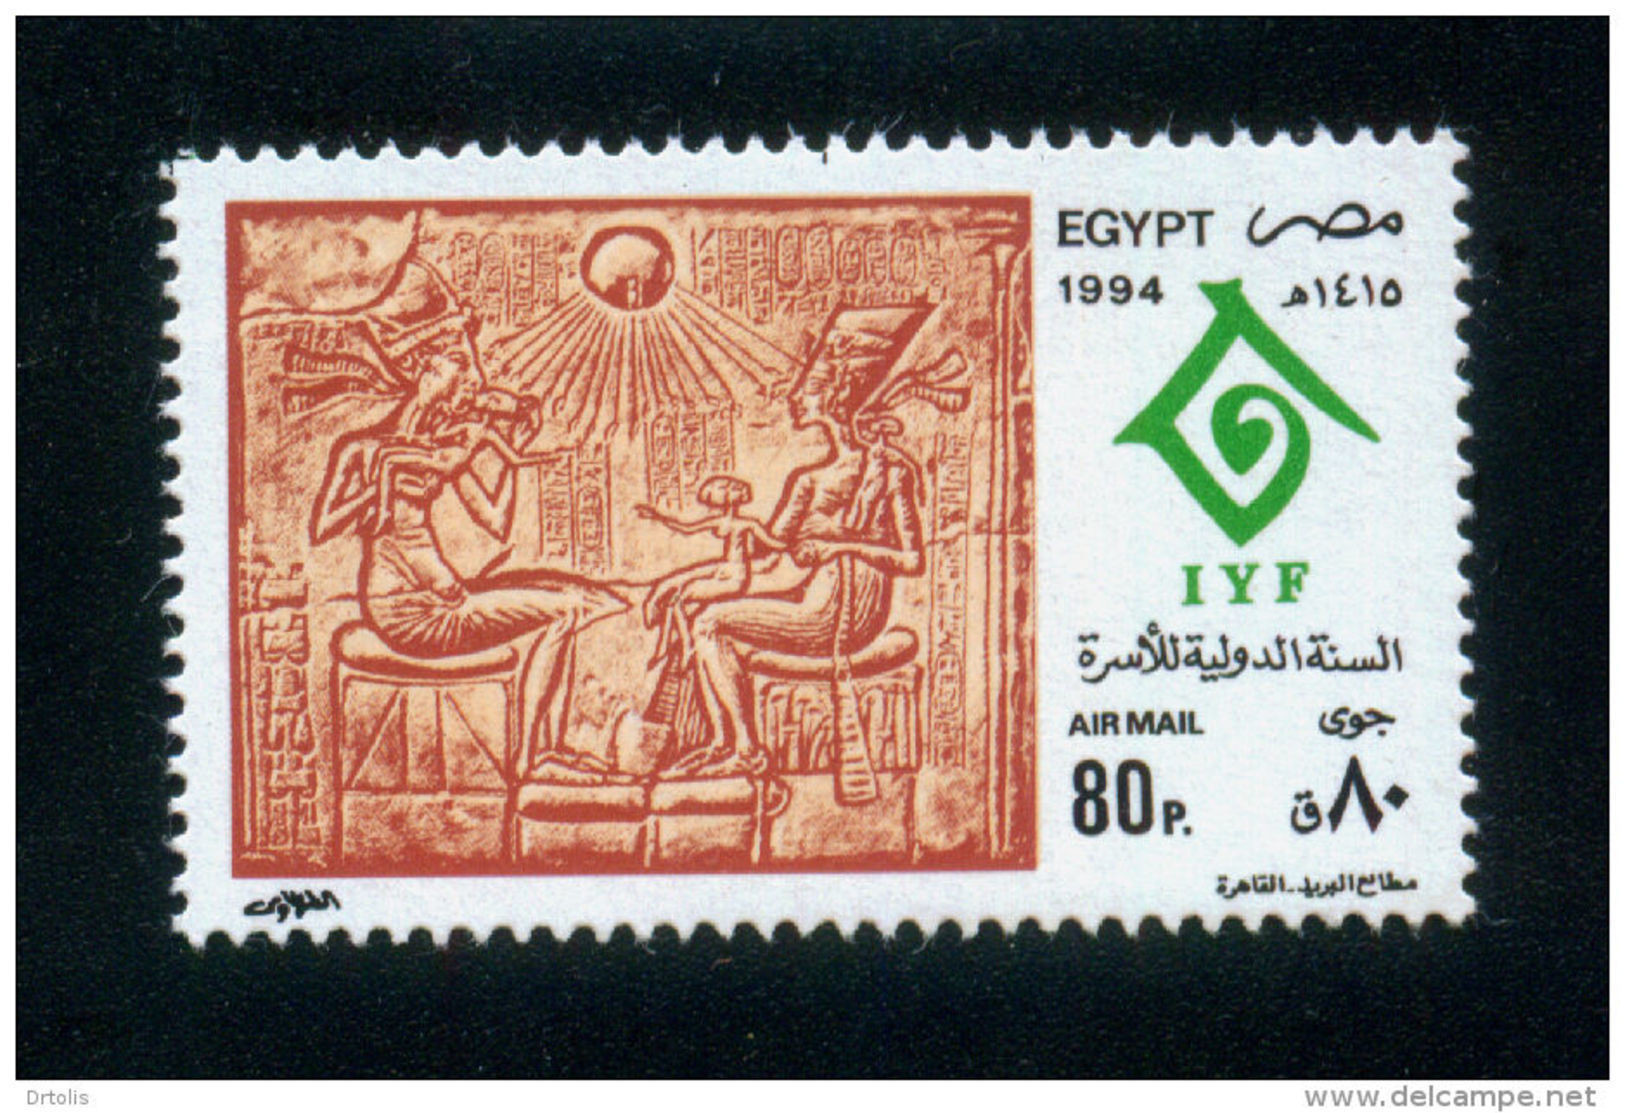 EGYPT / 1994 / UN / UN'S DAY / IYF/ INTL YEAR OF THE FAMILY / EGYPTOLOGY / AKHENATEN ; NEFERTITI & CHILDREN / MNH / VF - Neufs